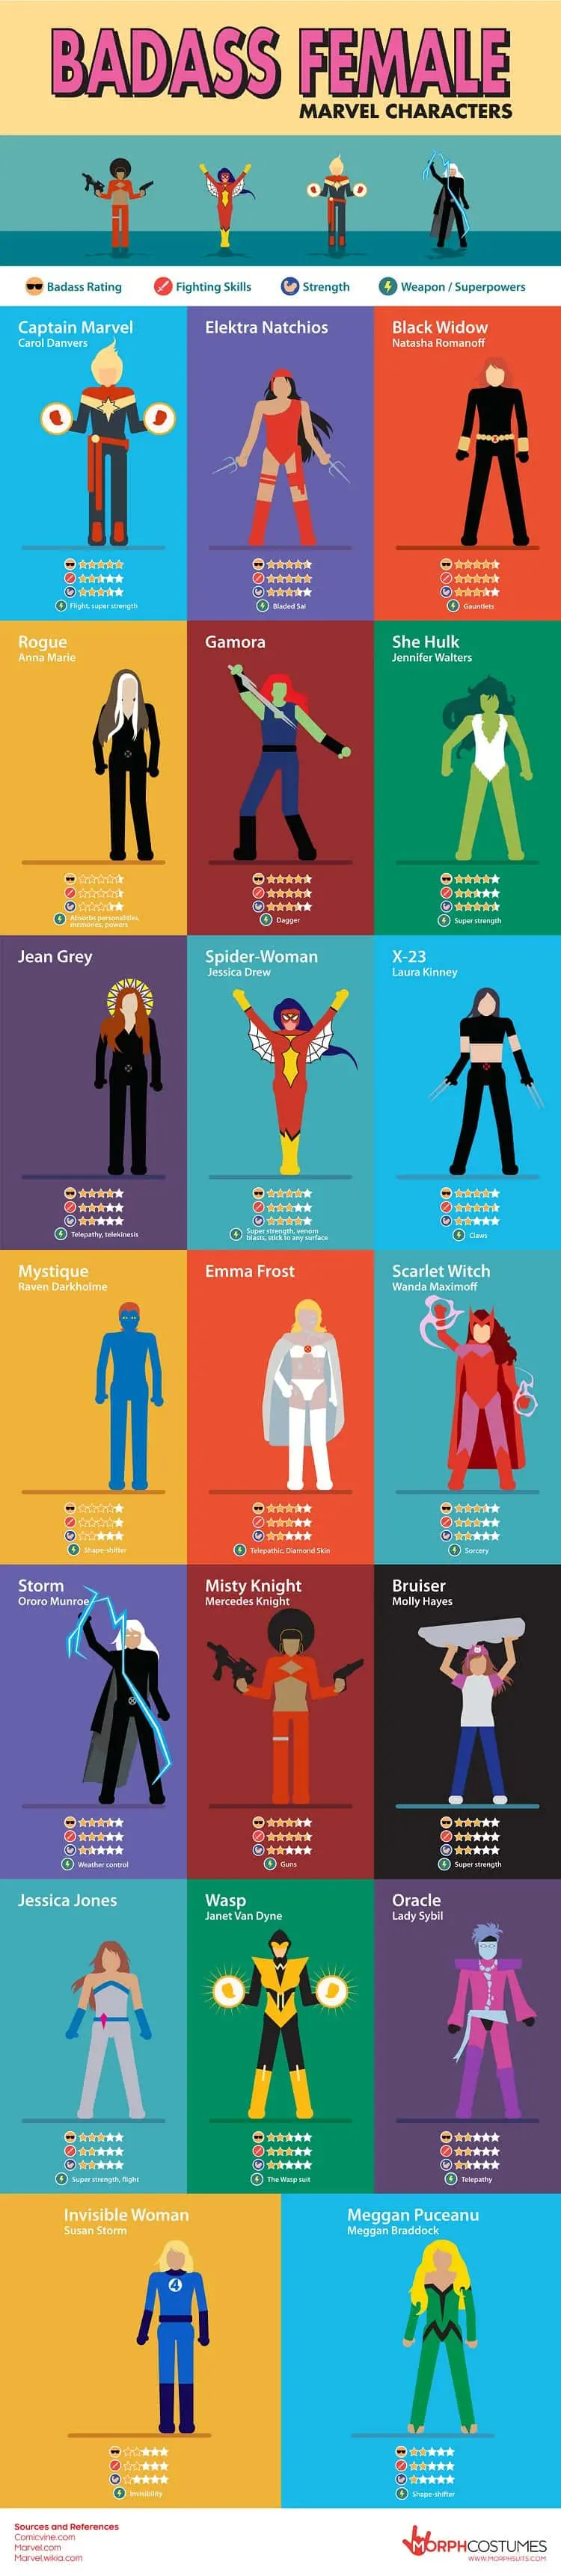 Badass-Female-Marvel-Characters